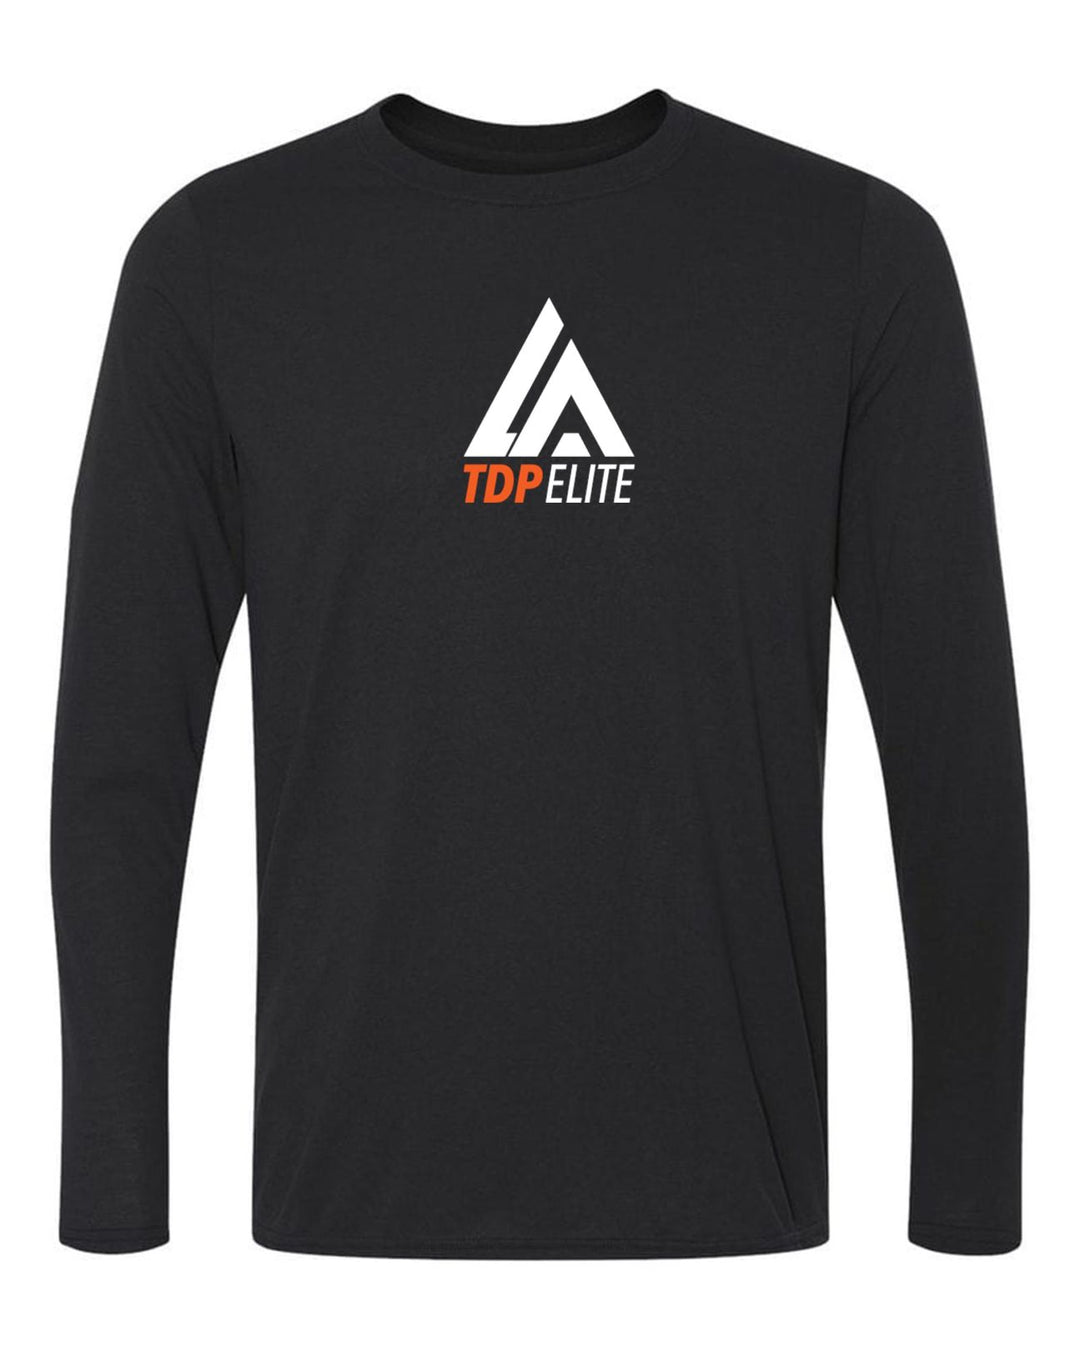 LATDP Elite Long-Sleeve T-Shirt LATDP Spiritwear BLACK YOUTH MEDIUM - Third Coast Soccer